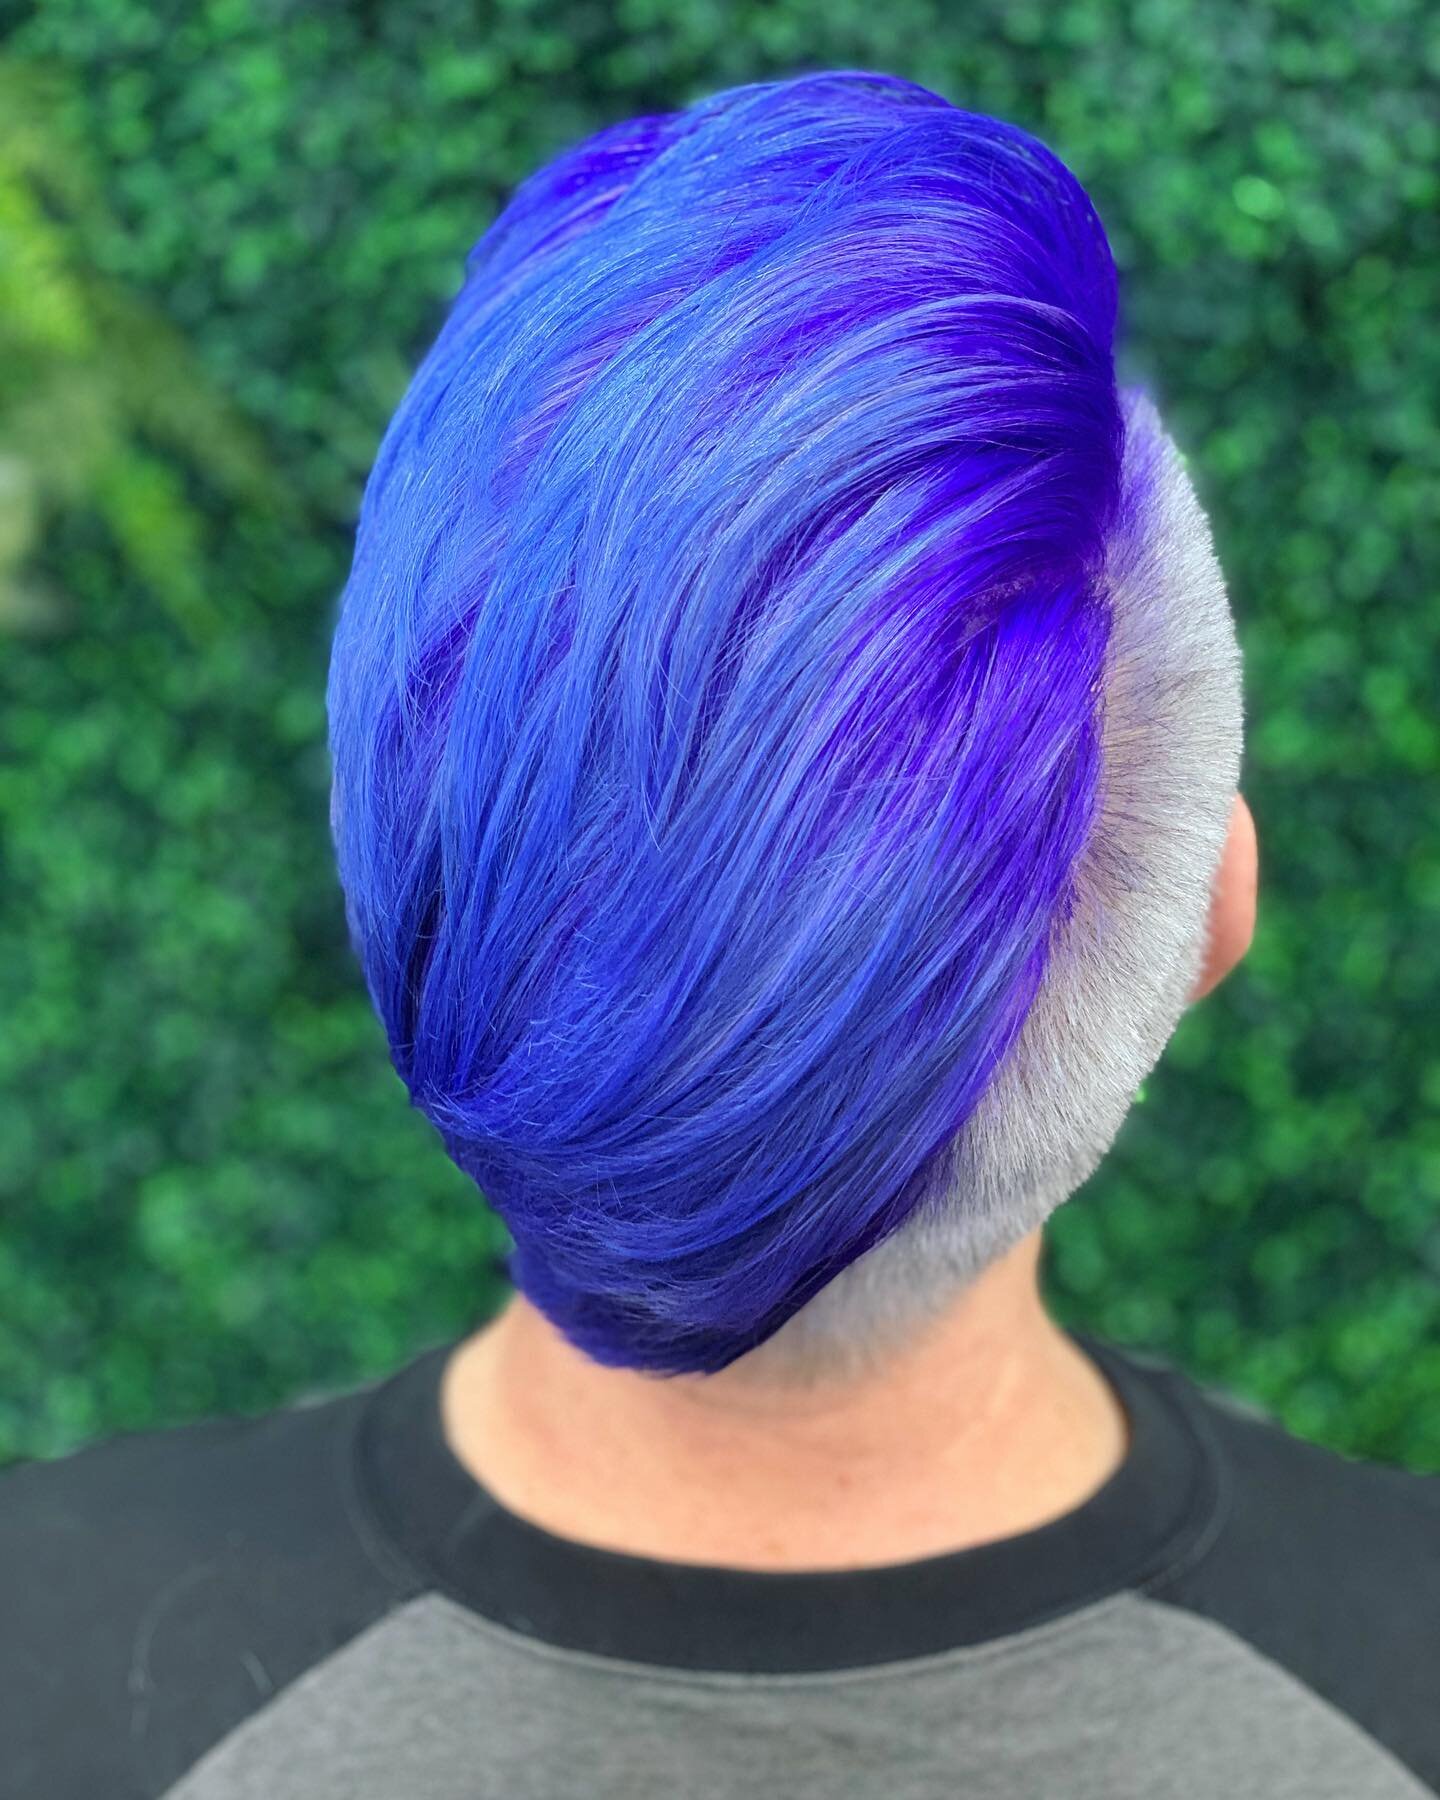 This client had the coolest ideas! Always inspired by others ✨

#hairstylist #urbanfringesalon #durhamsalon #chapelhillsalon #purplehair #bluehair #splithair #creative #creativecut #licensedtocreate #lovewhatyoudo